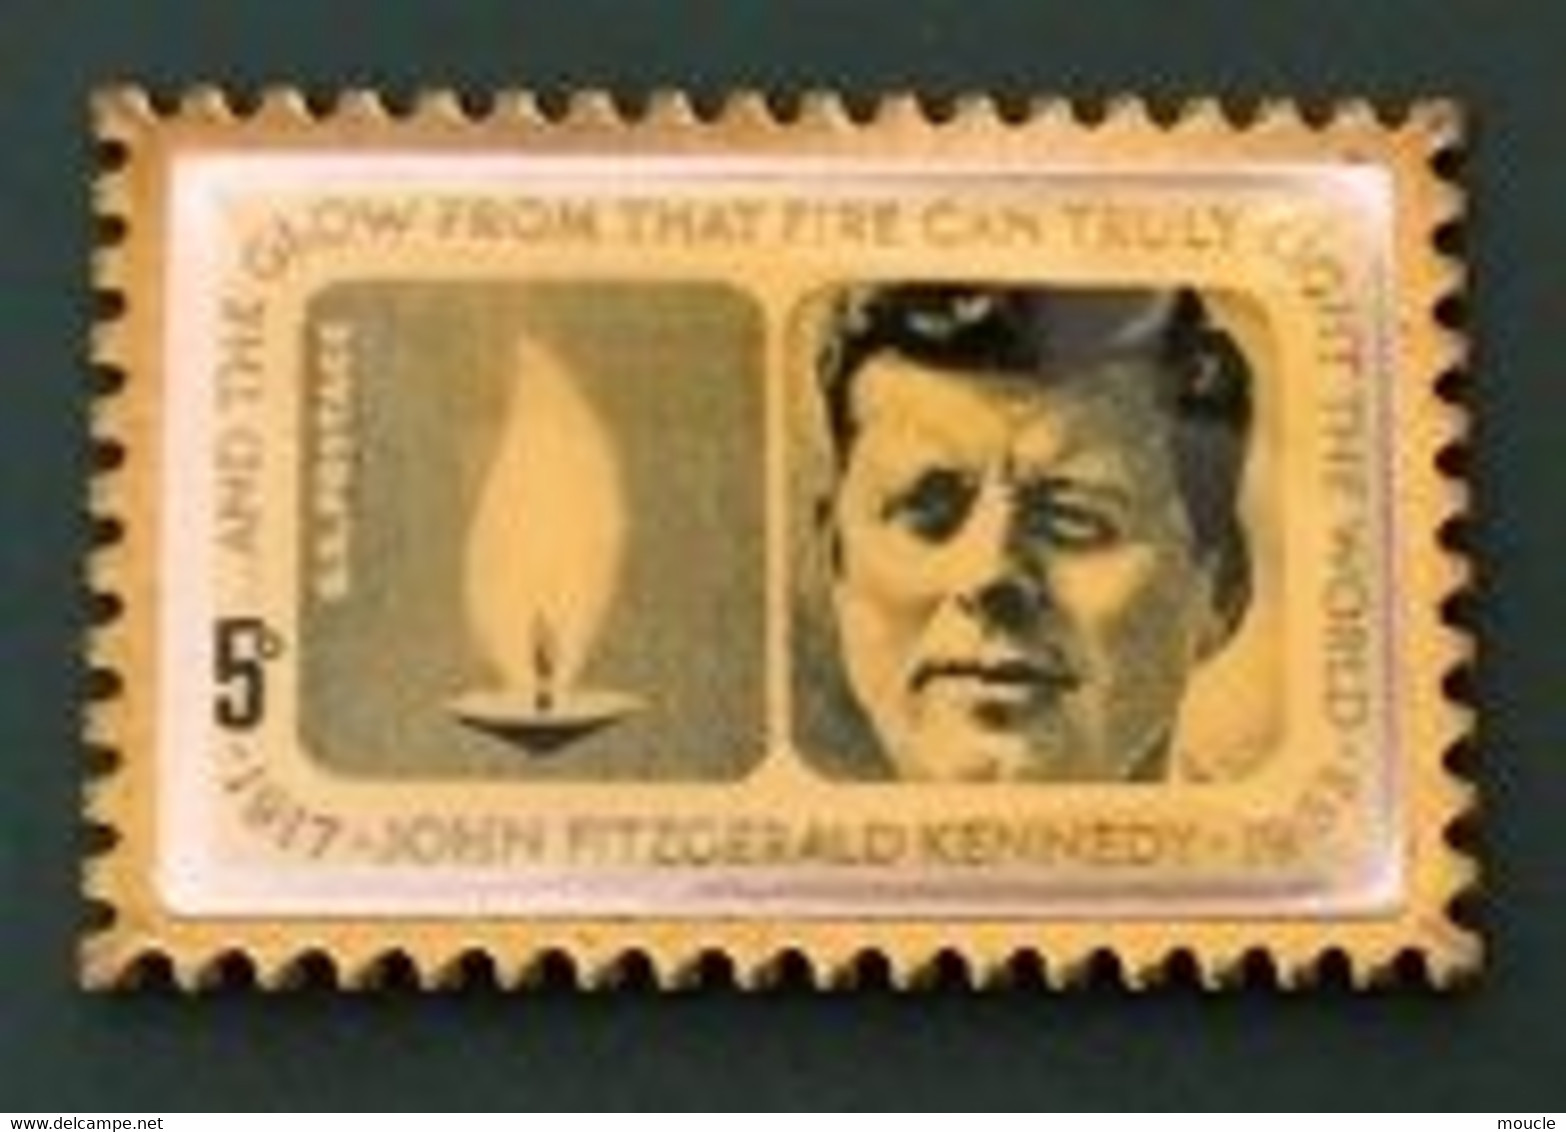 JFK - JOHN FITZGERALD KENNEDY - 1917 / 1963 - USA - 35ème PRESIDENT - TIMBRE - ROCKVILLE MARYLAND - STAMP -     (31) - Celebrities